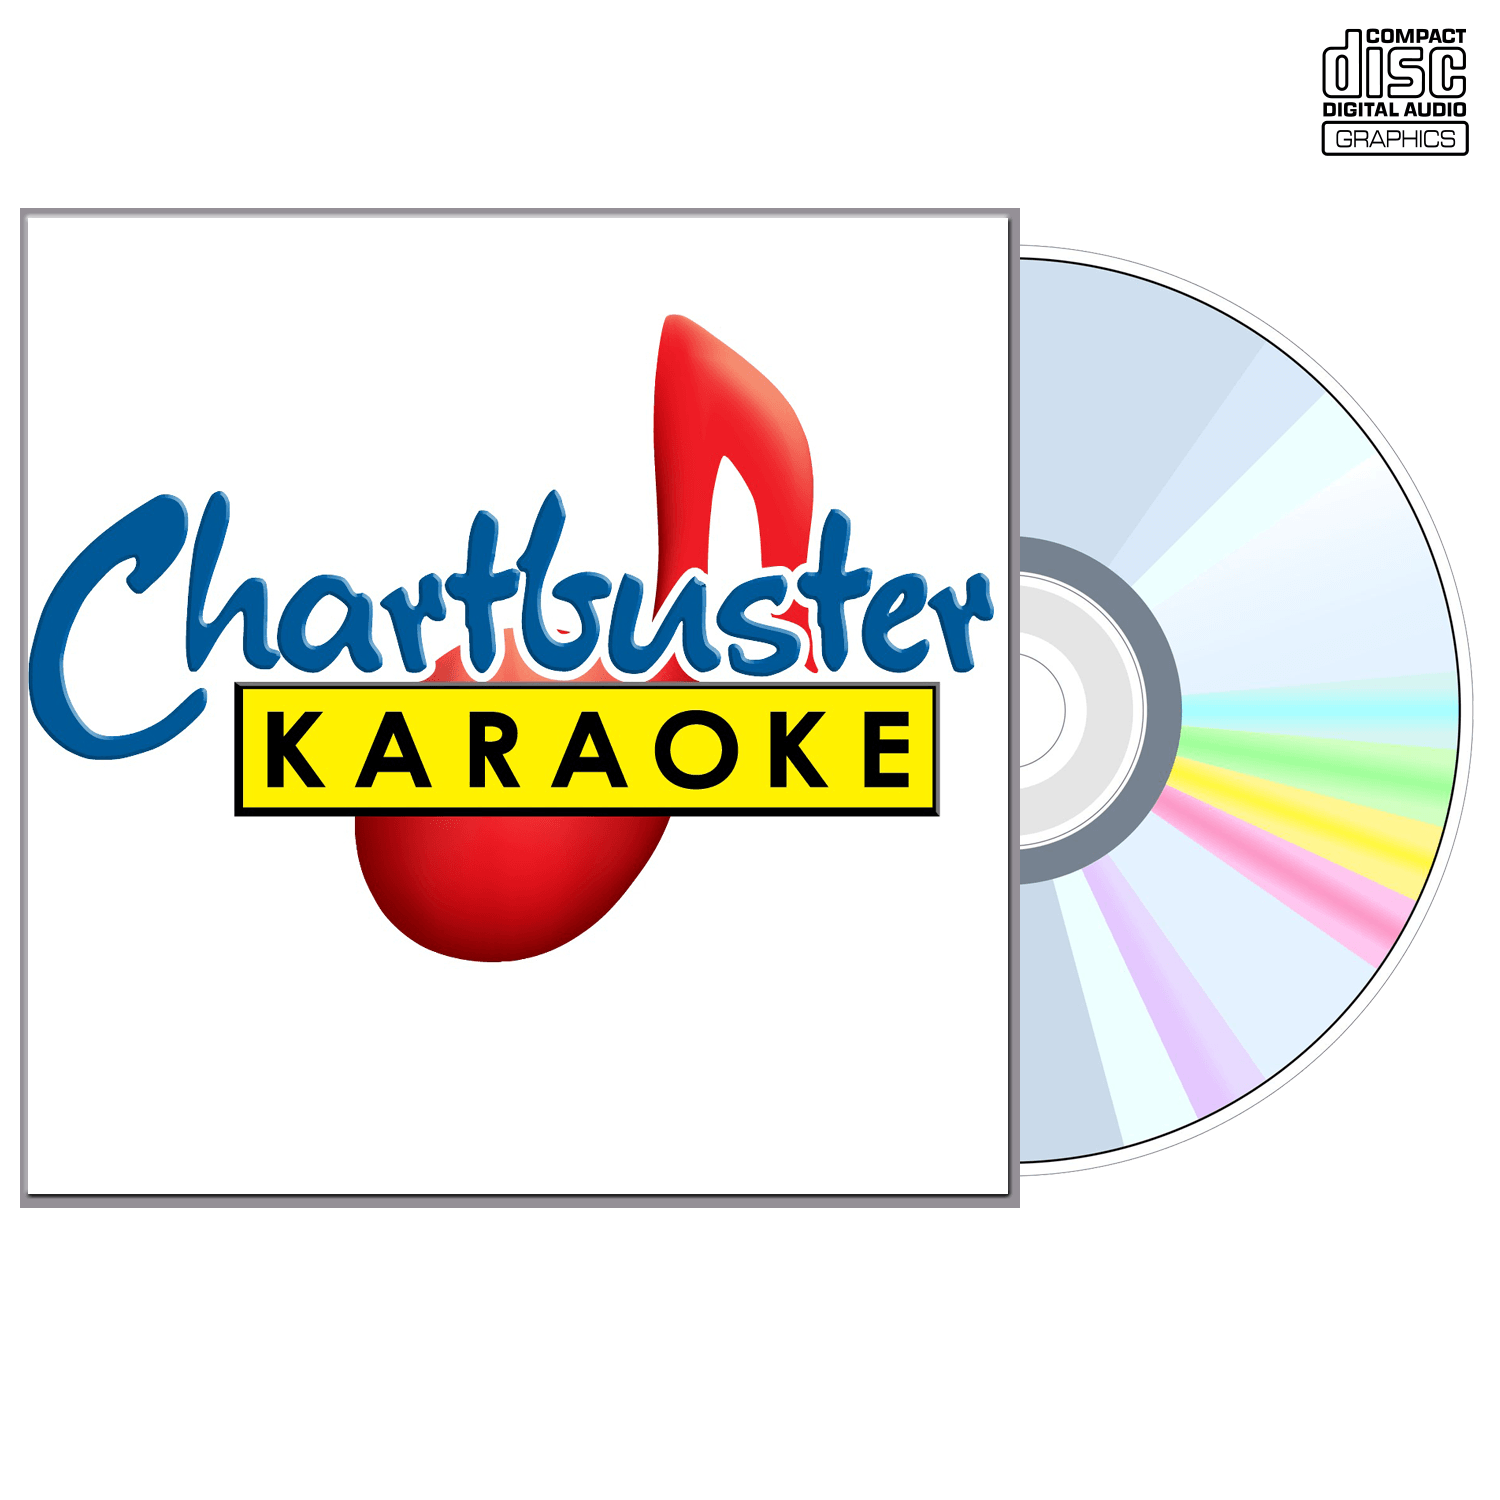 Gary Allan Vol 2 - CD+G - Chartbuster Karaoke - Karaoke Home Entertainment